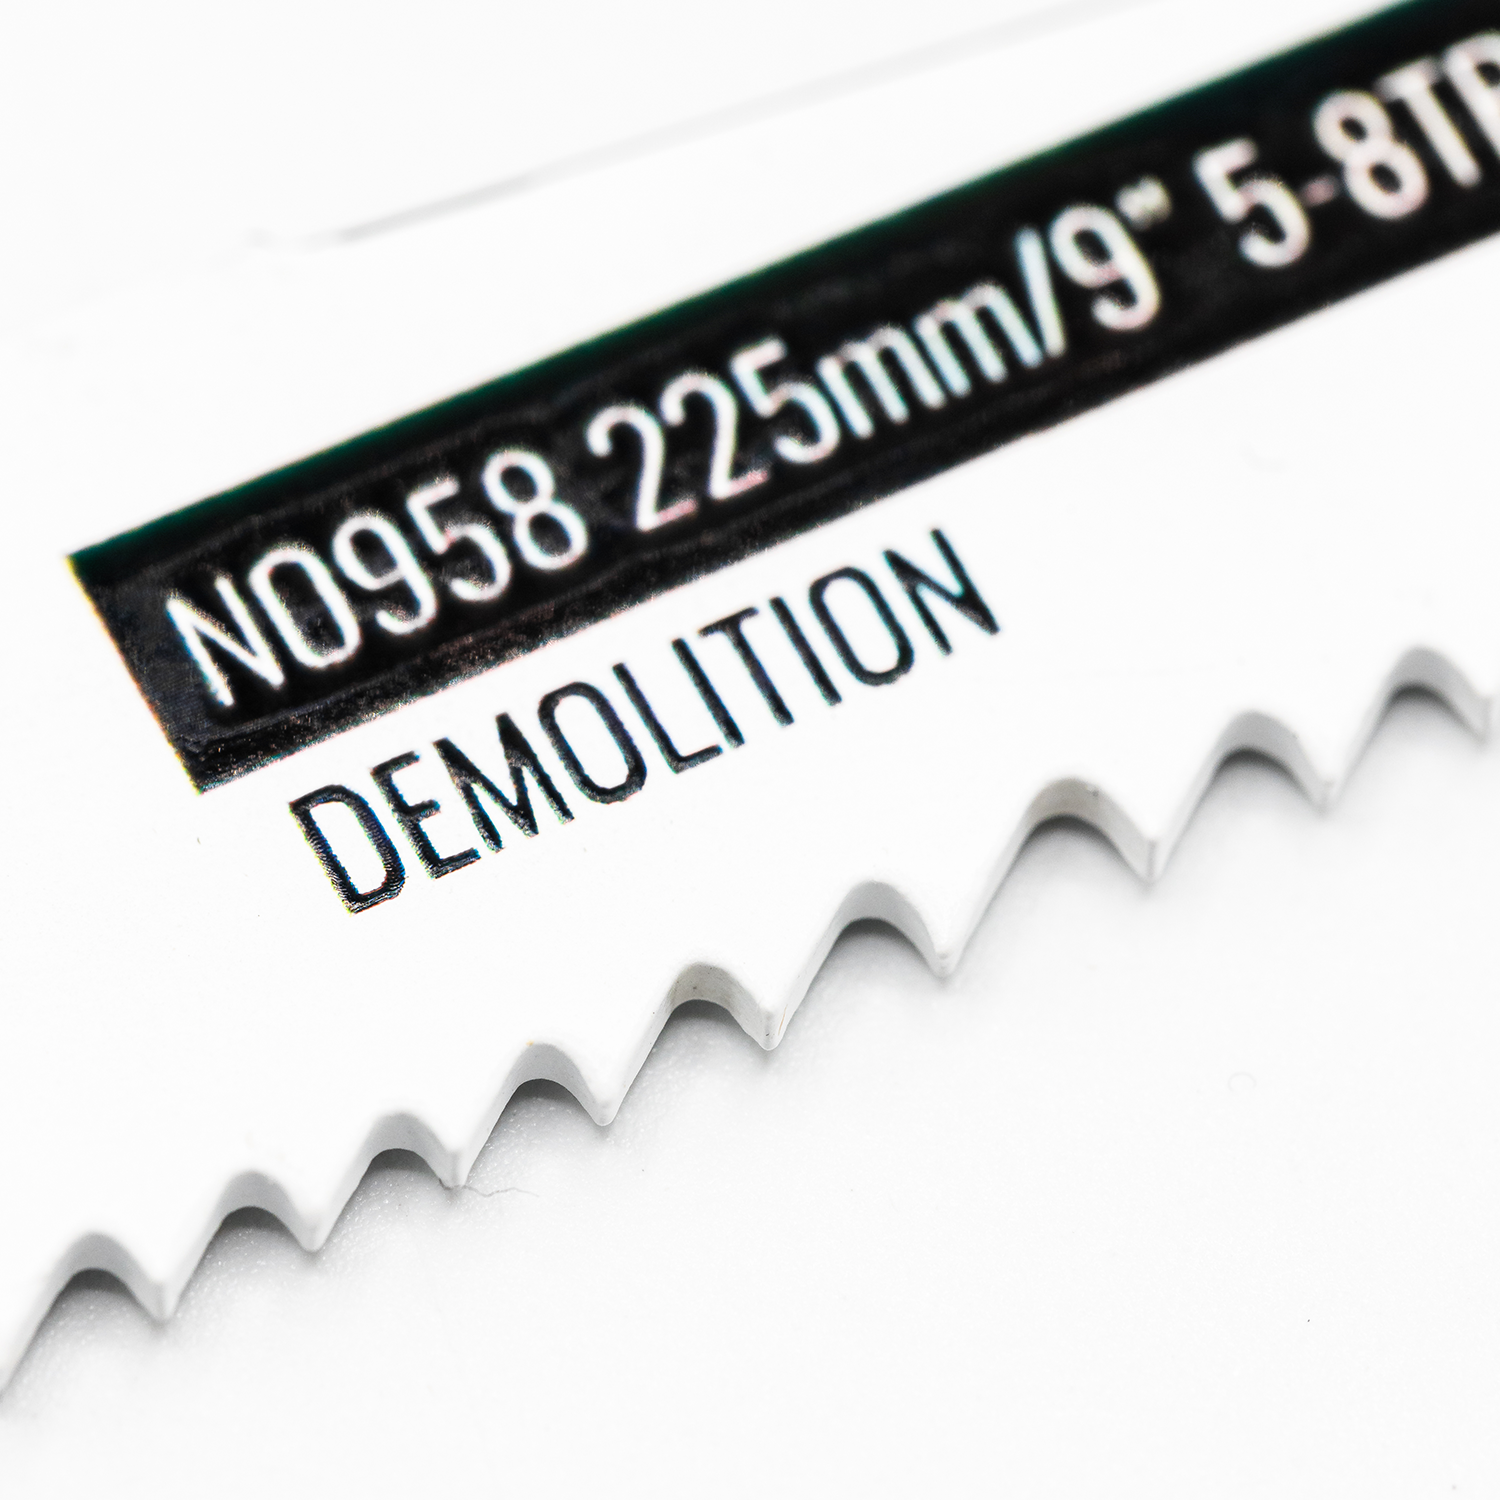 Demolition reciprocating saw blade for wood/metal 225mm